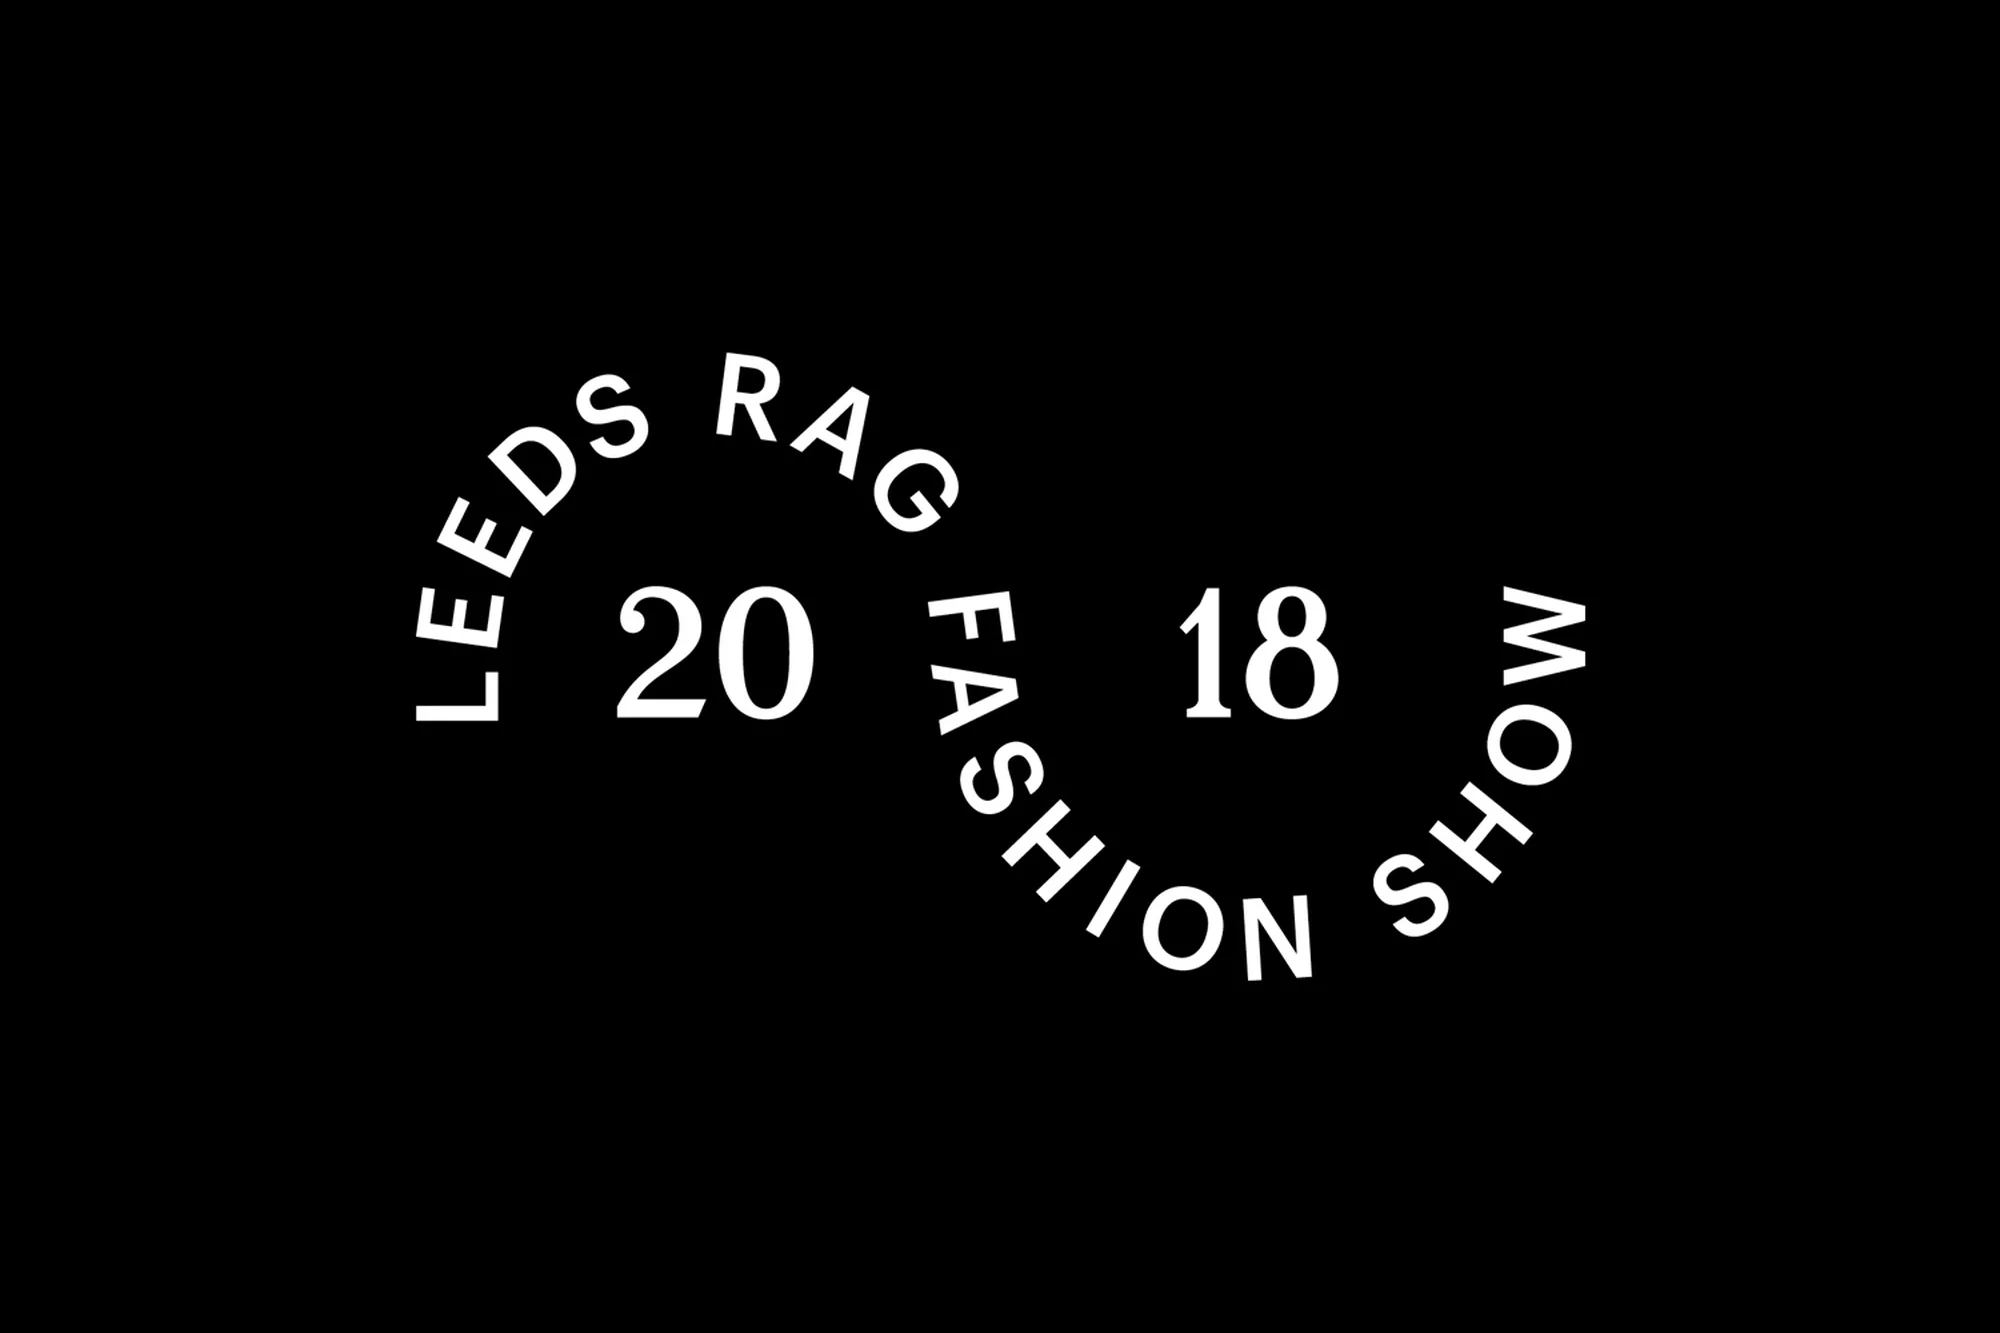 Leeds RAG Fashion Show by Saul Studio